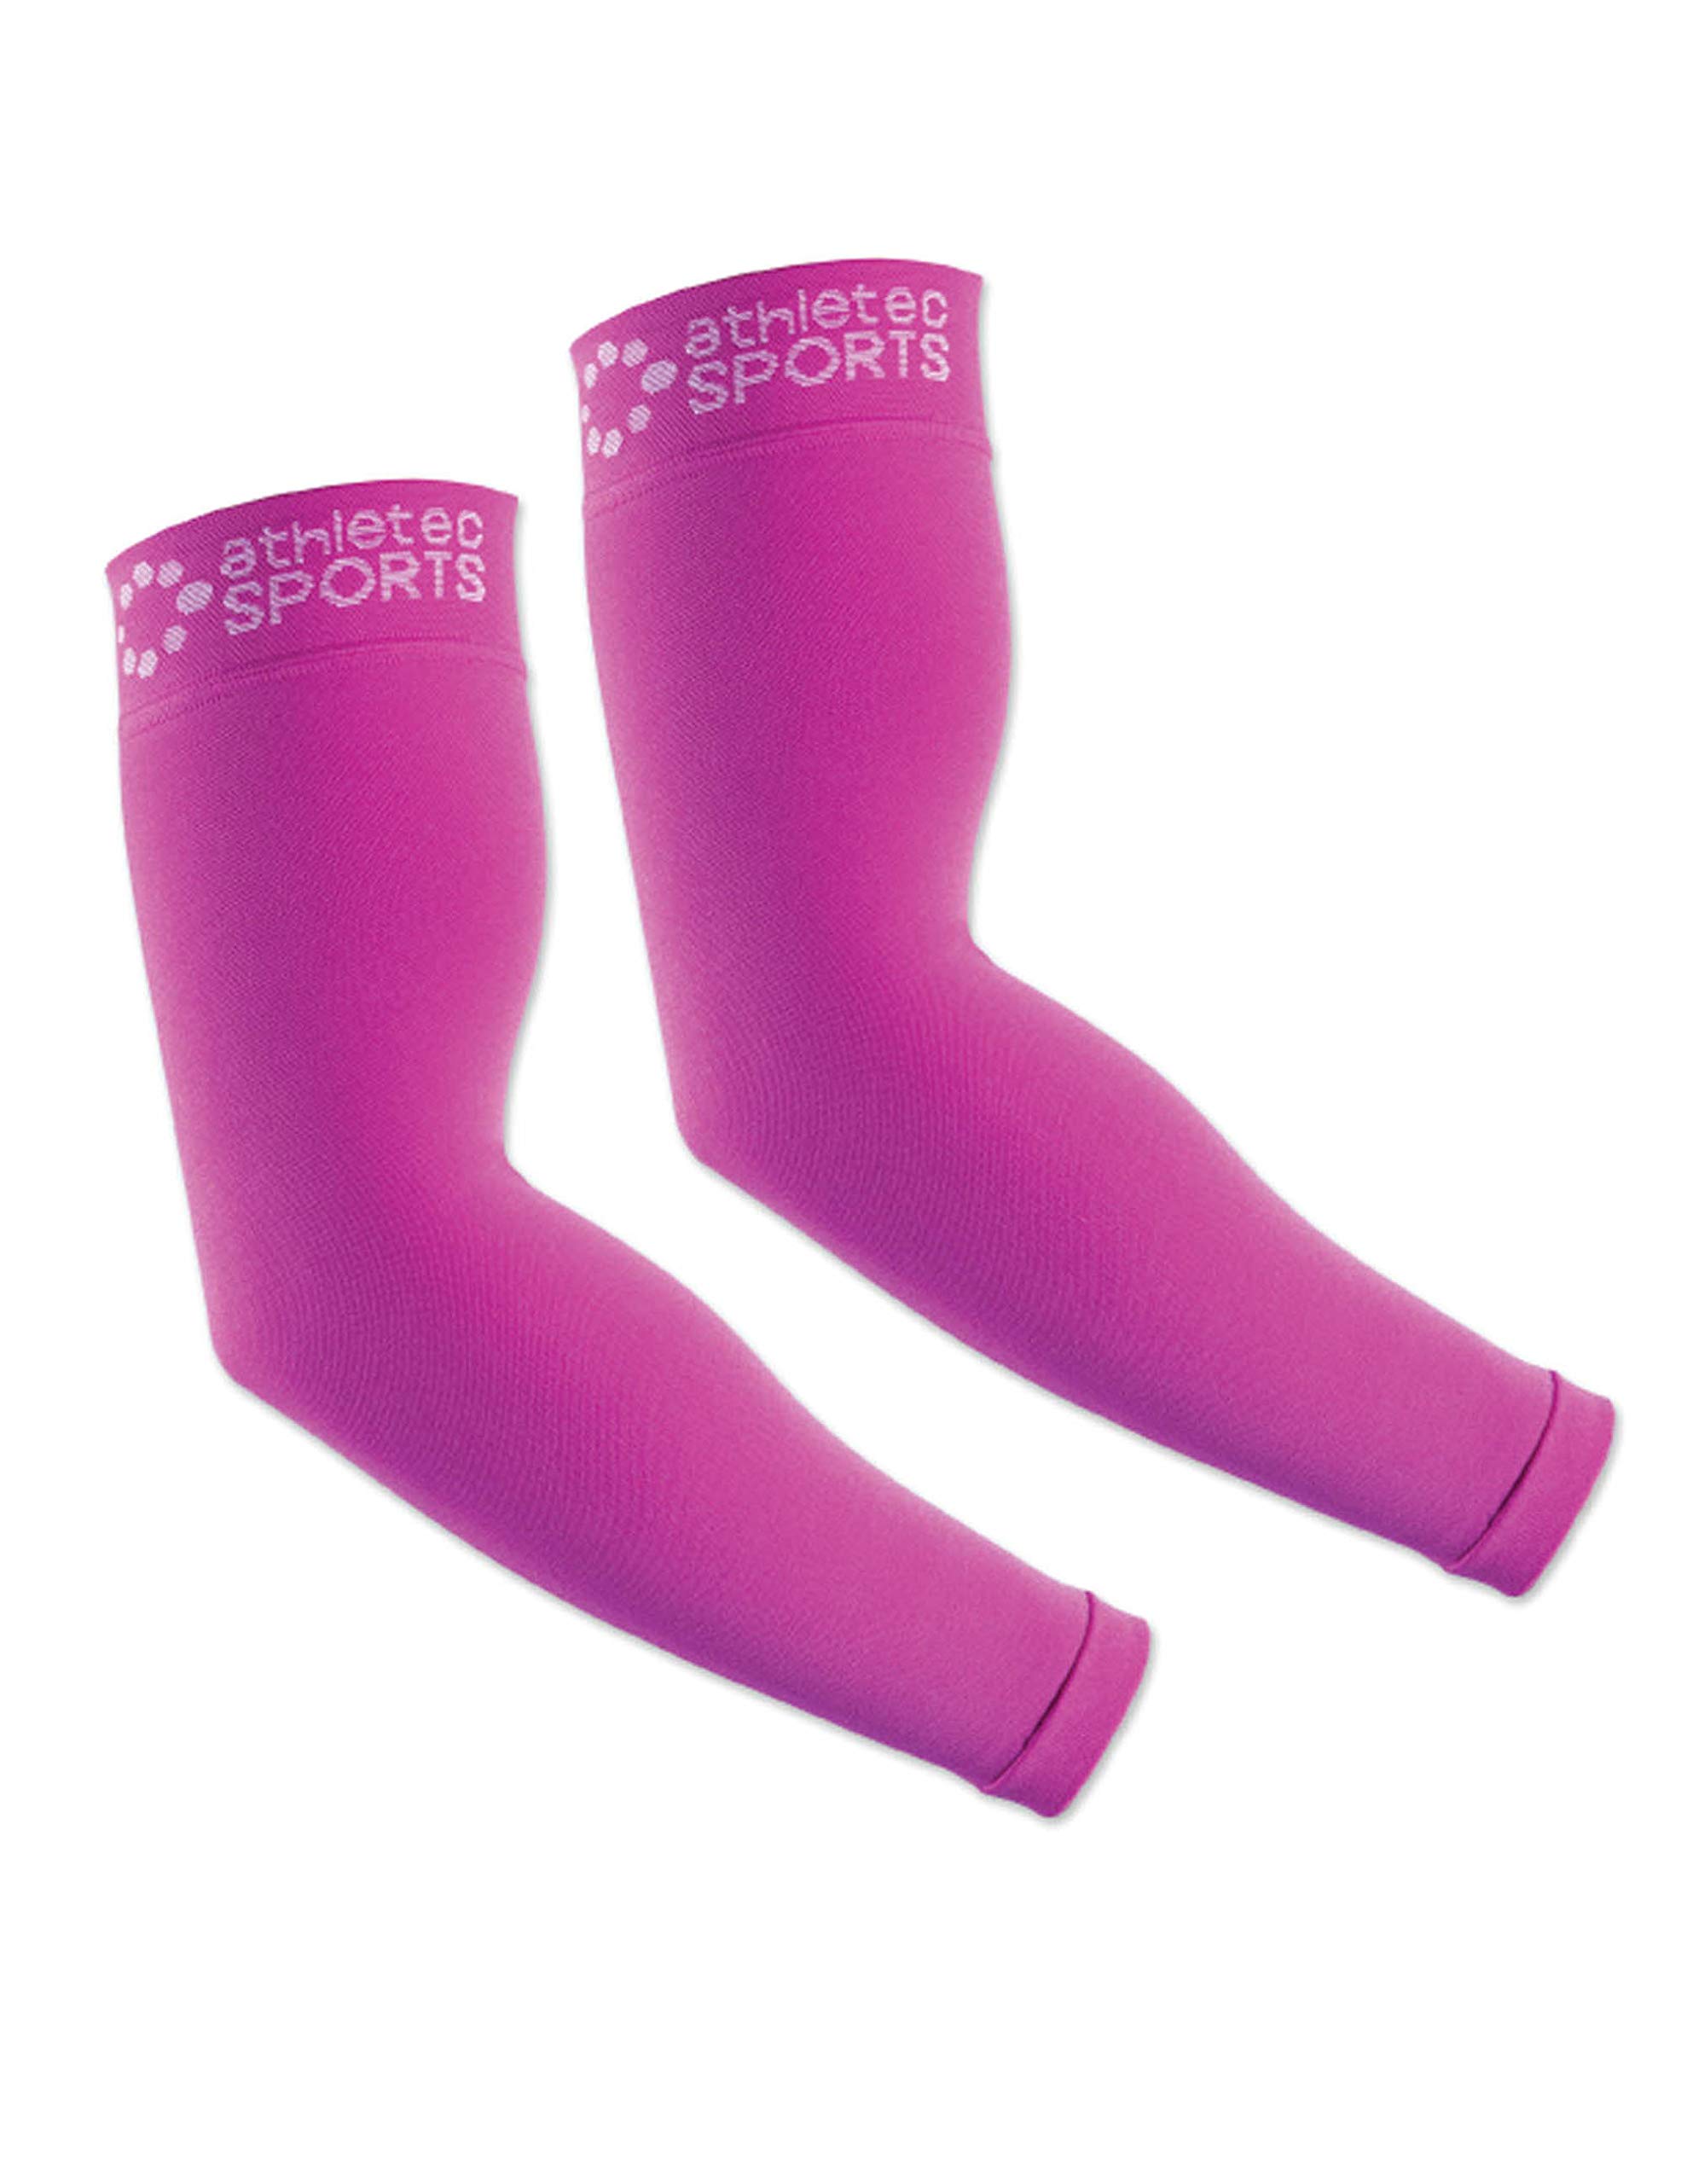 Athletec Sport Compression Arm Sleeve Large-X-Large Hot Pink